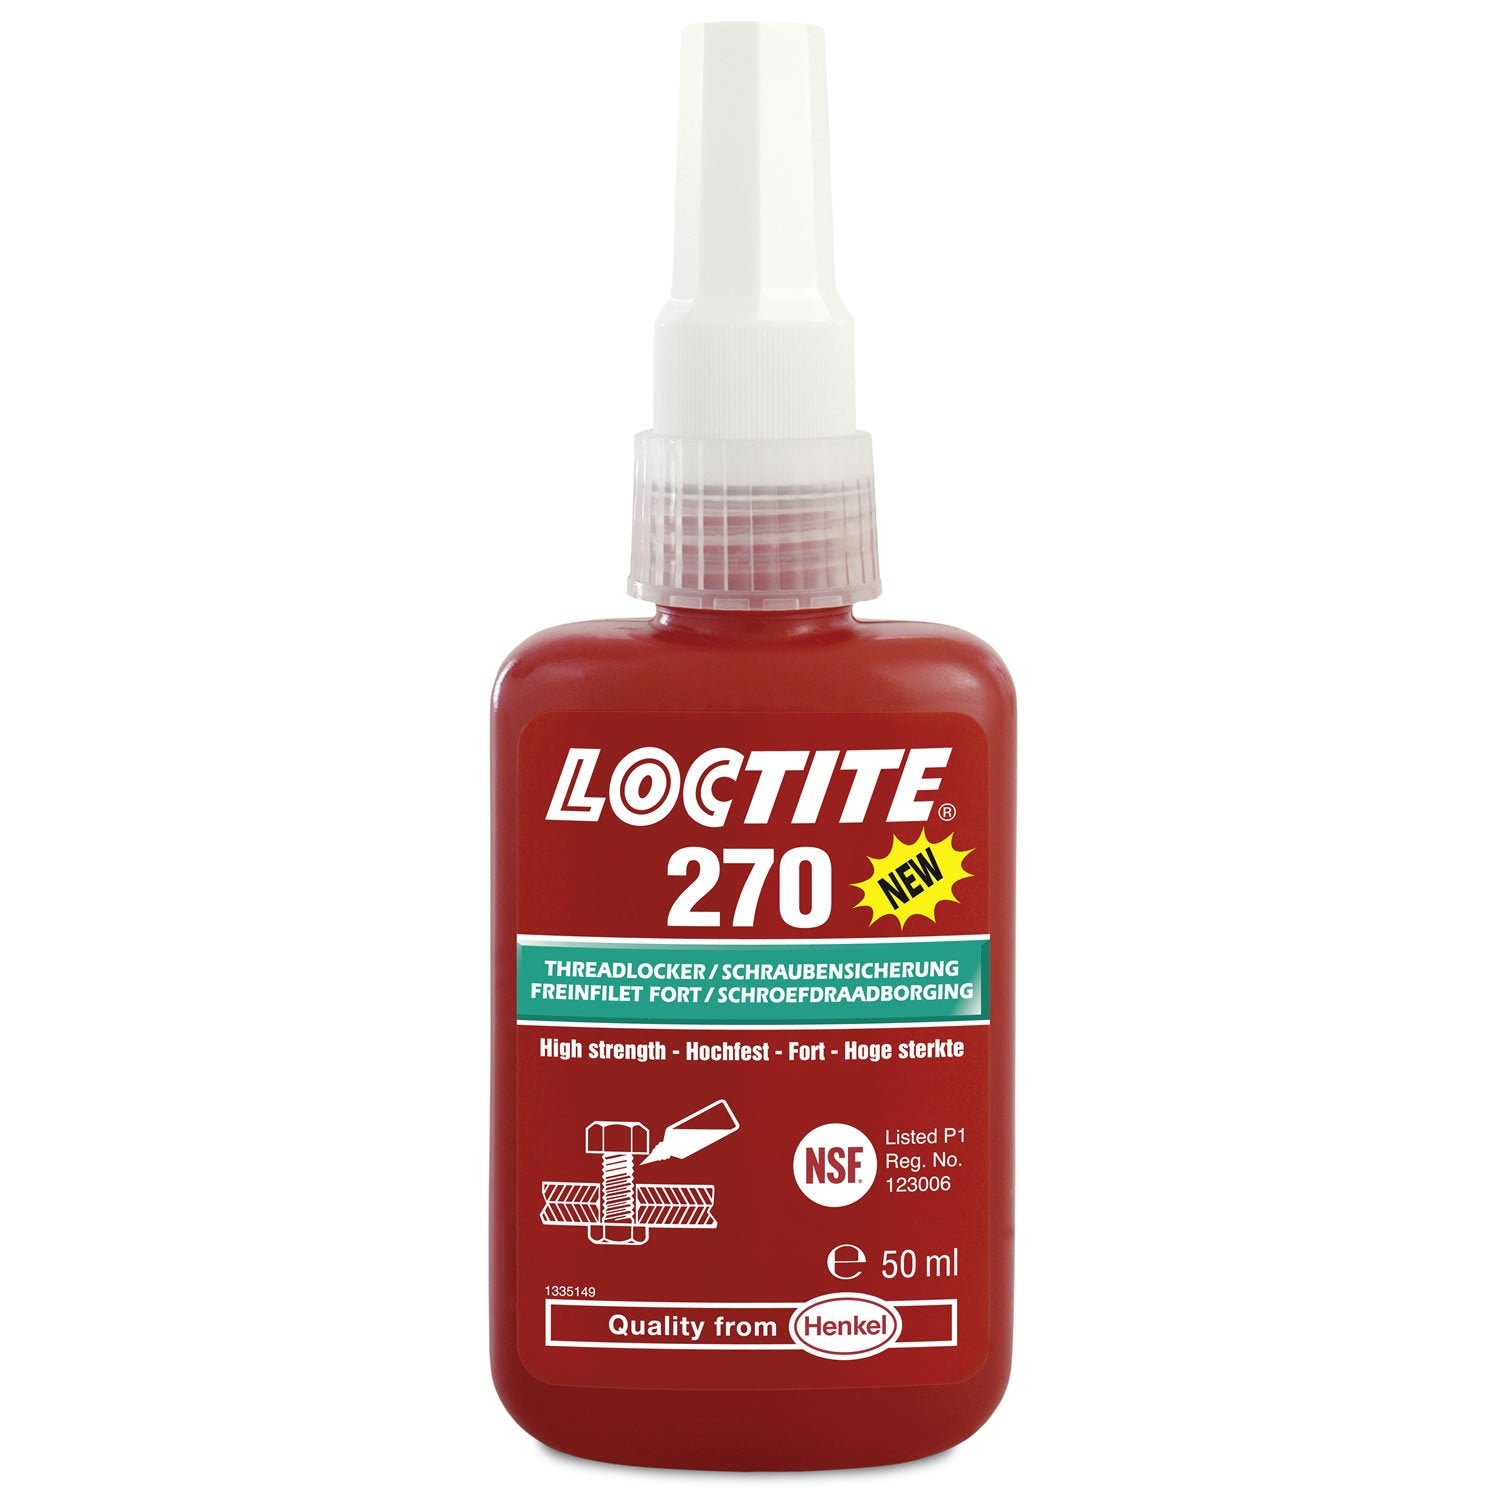 Loctite 270 High Strength Threadlocker 50 mL